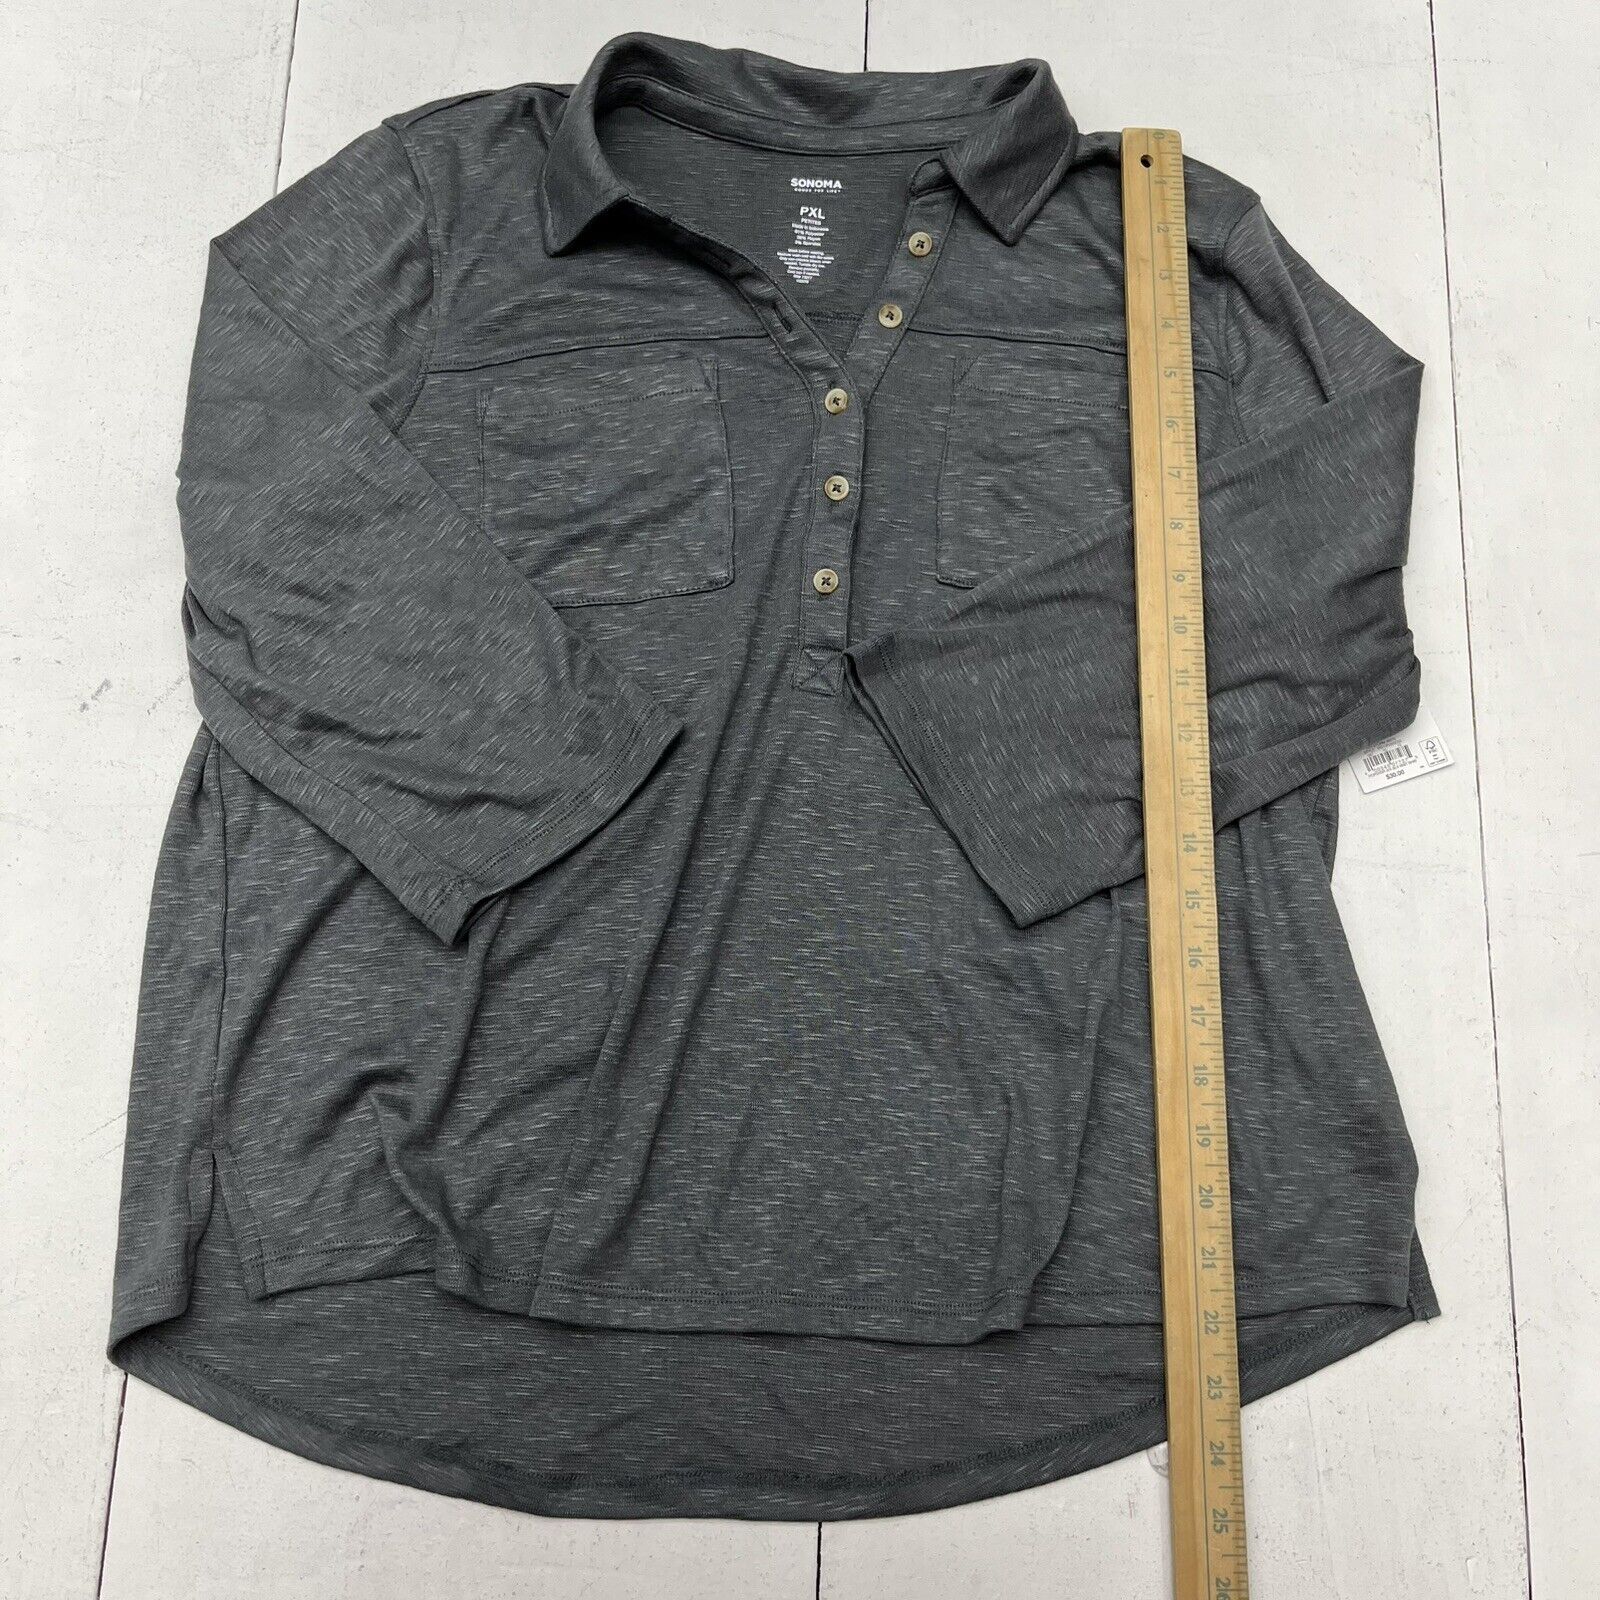 Sonoma Size XL Shirt